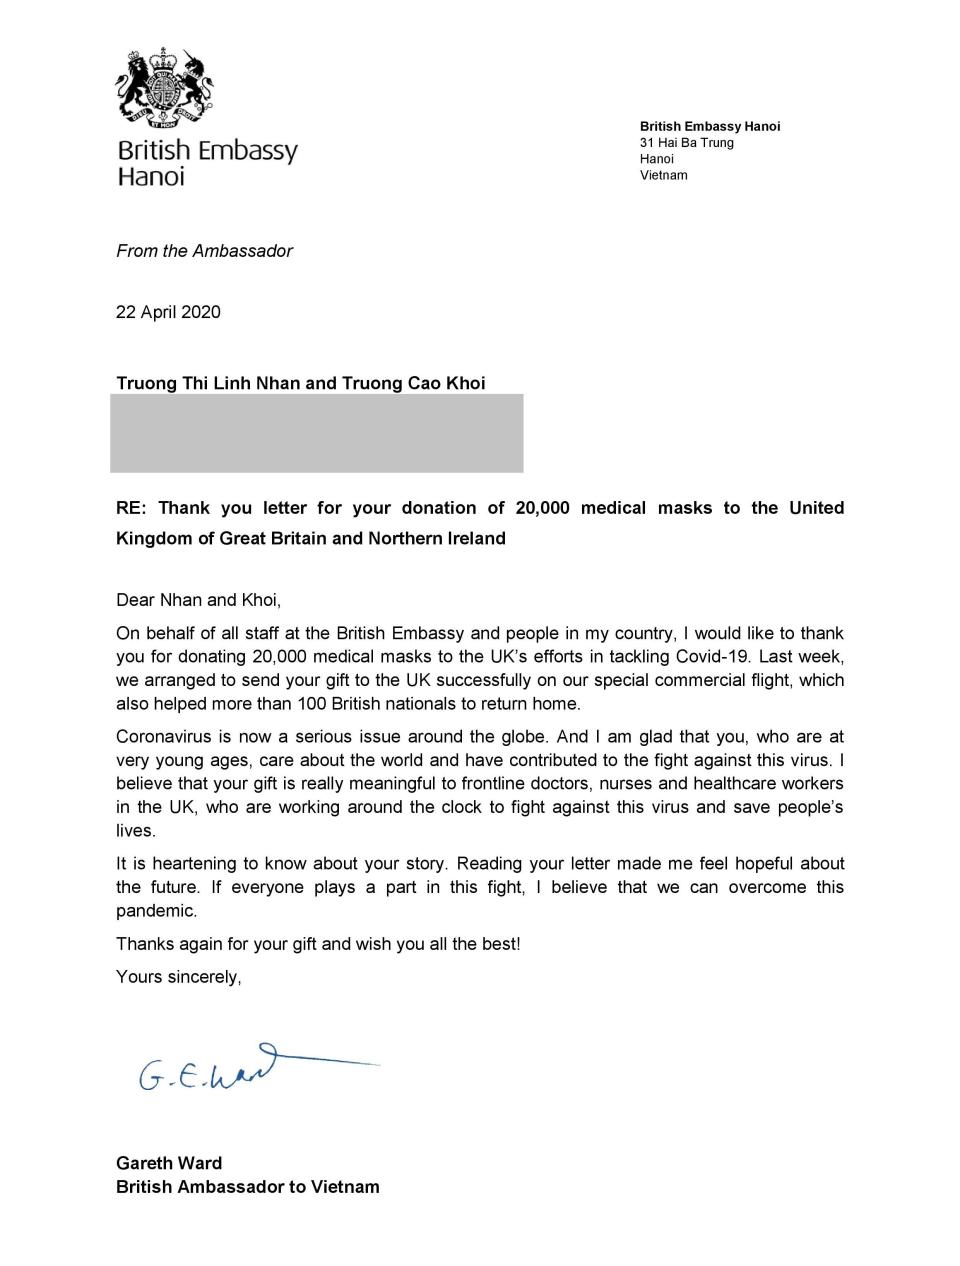 Ambassador Gareth Ward's letter